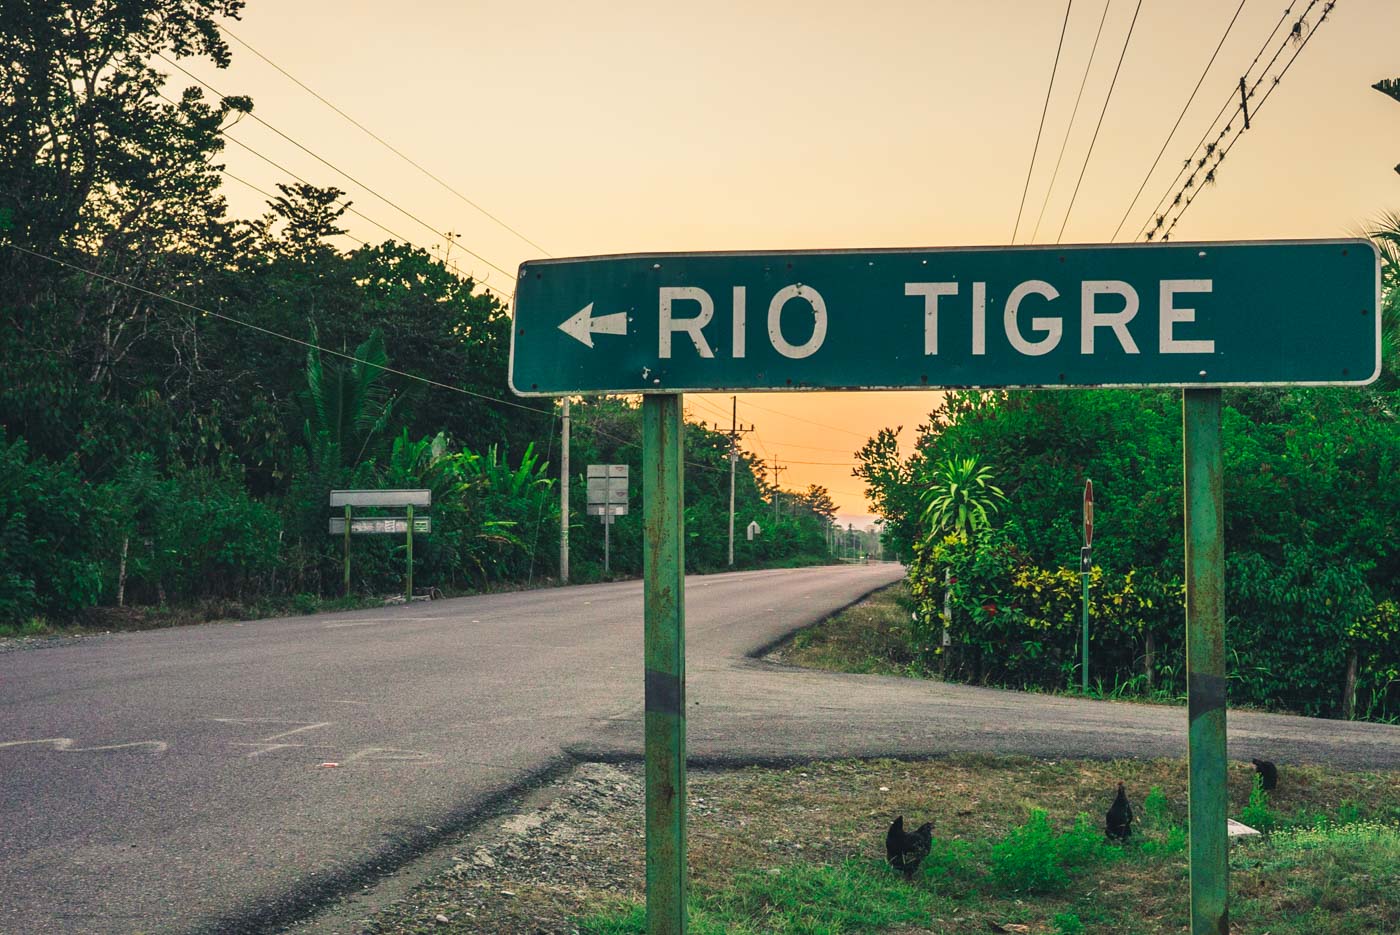 Rio Tigre, the getaway to rural tourism in Osa Peninsula Costa Rica